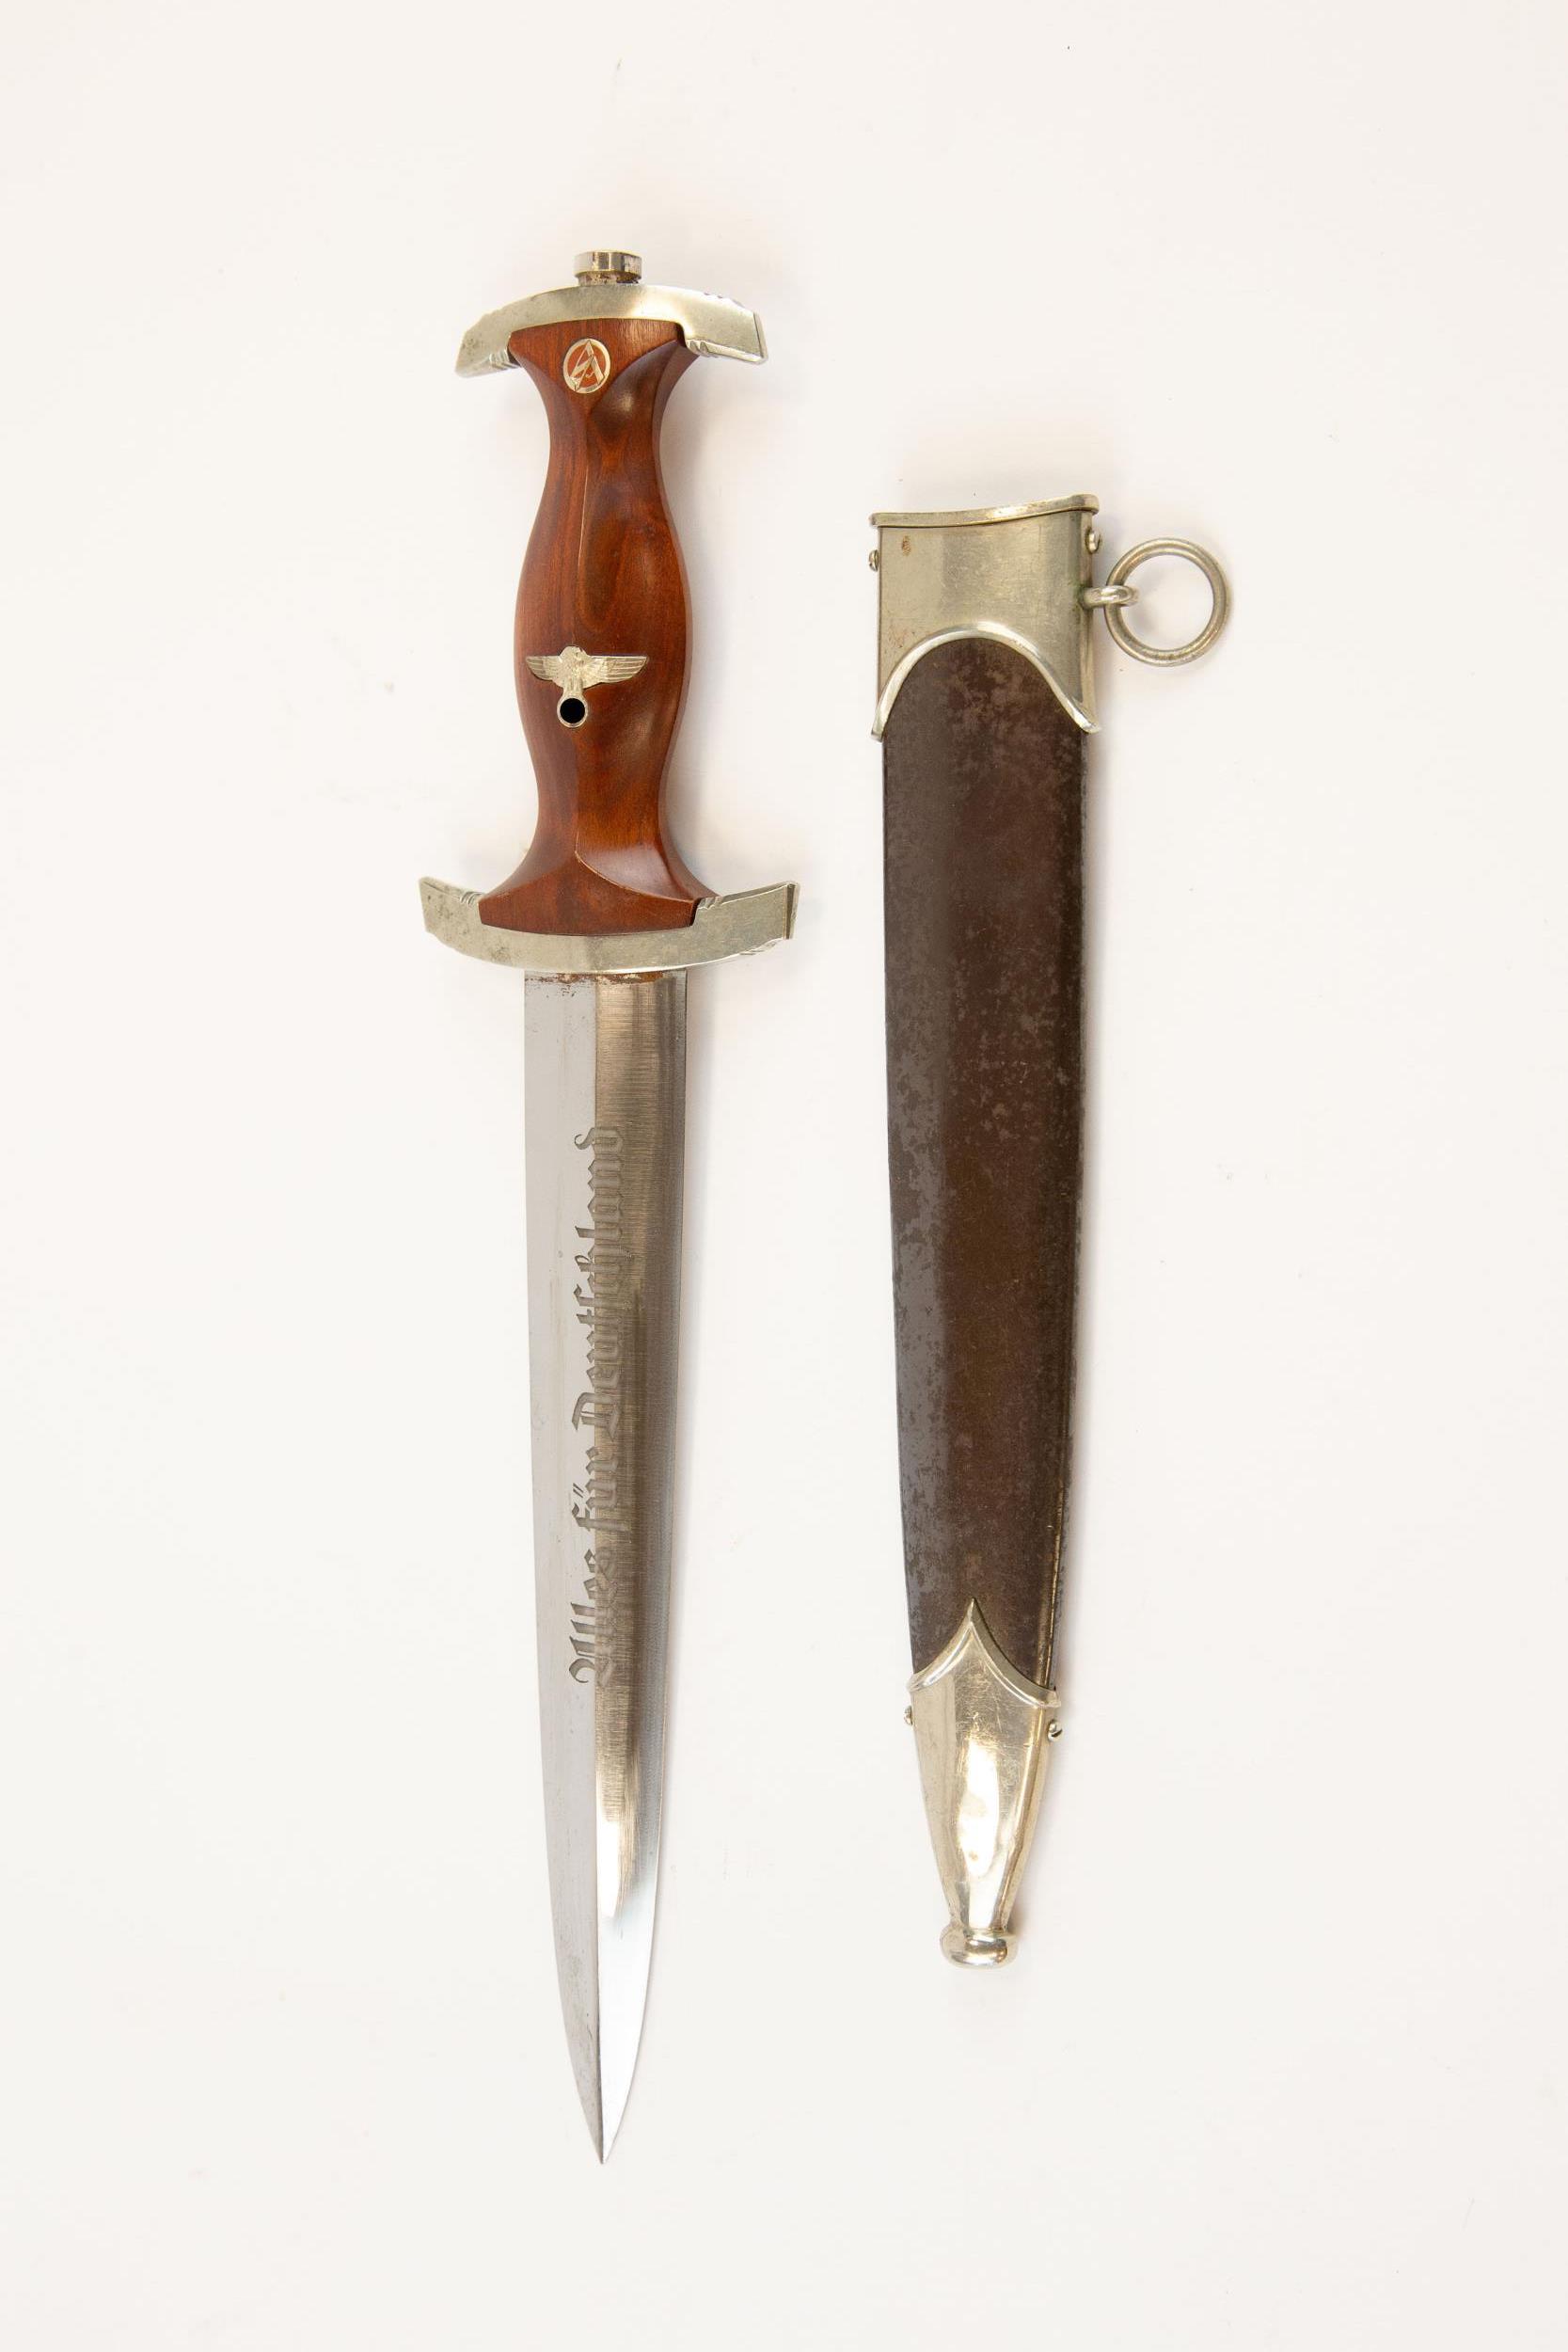 A Third Reich SA dagger with full Ernst Rohm inscription, with pre 1935 Carl Eickhorn mark, nickel